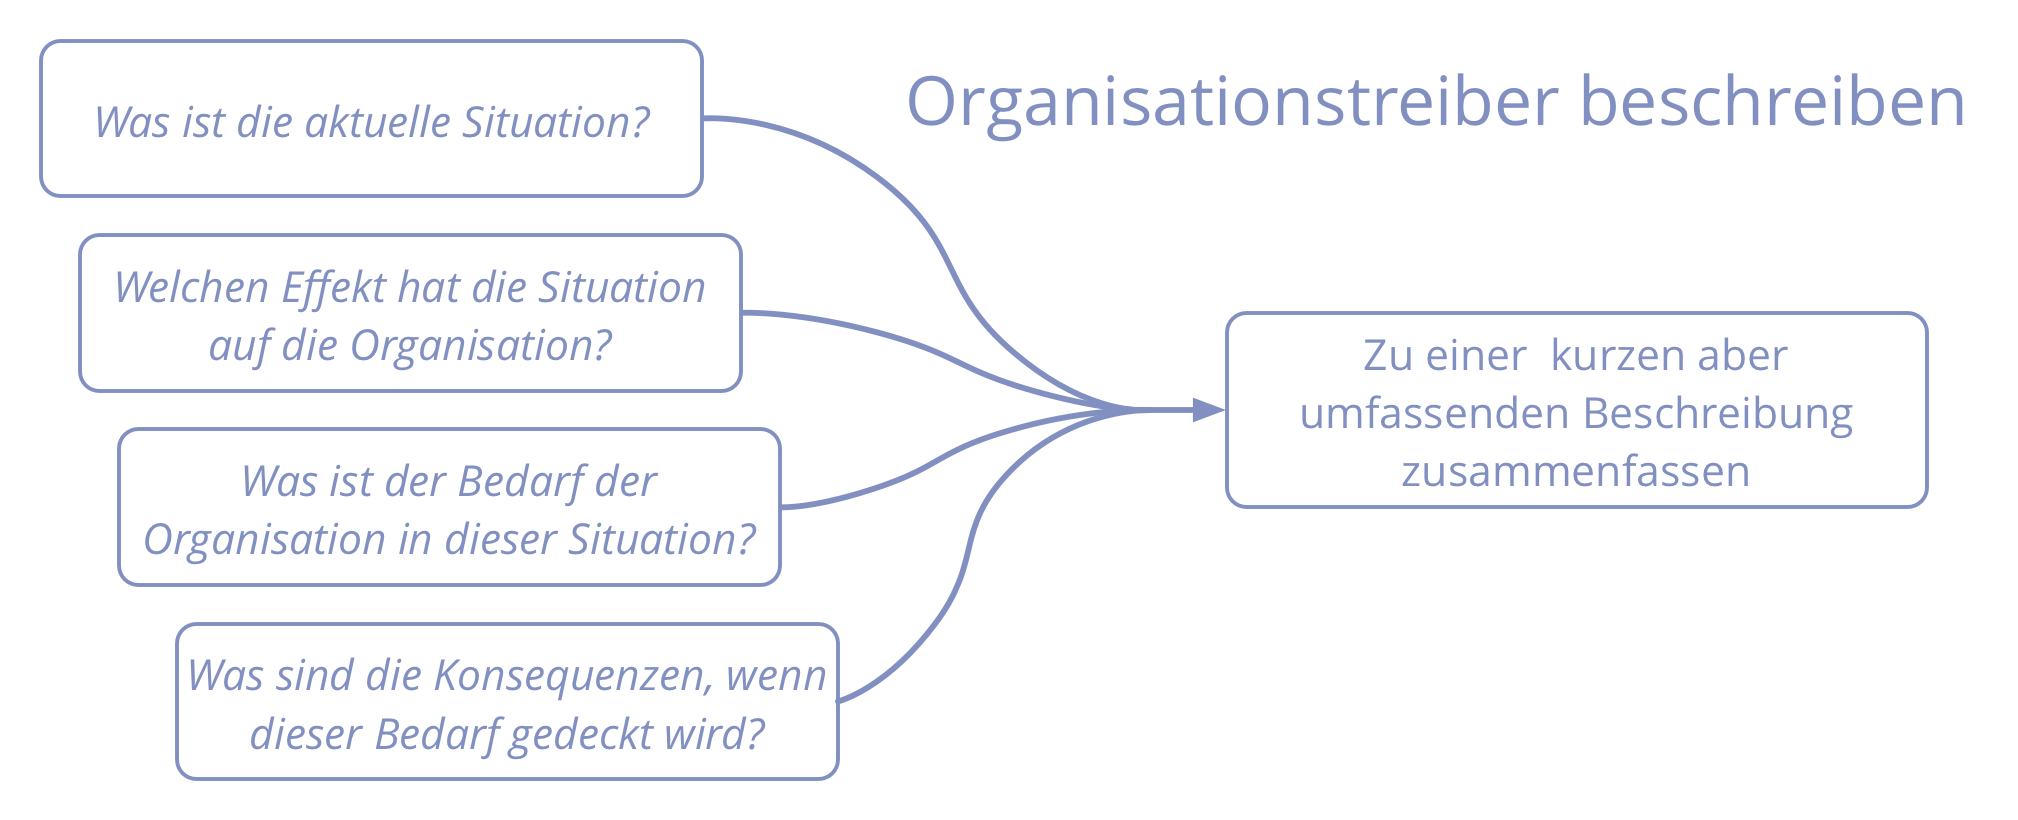 Organisationstreiber beschreiben